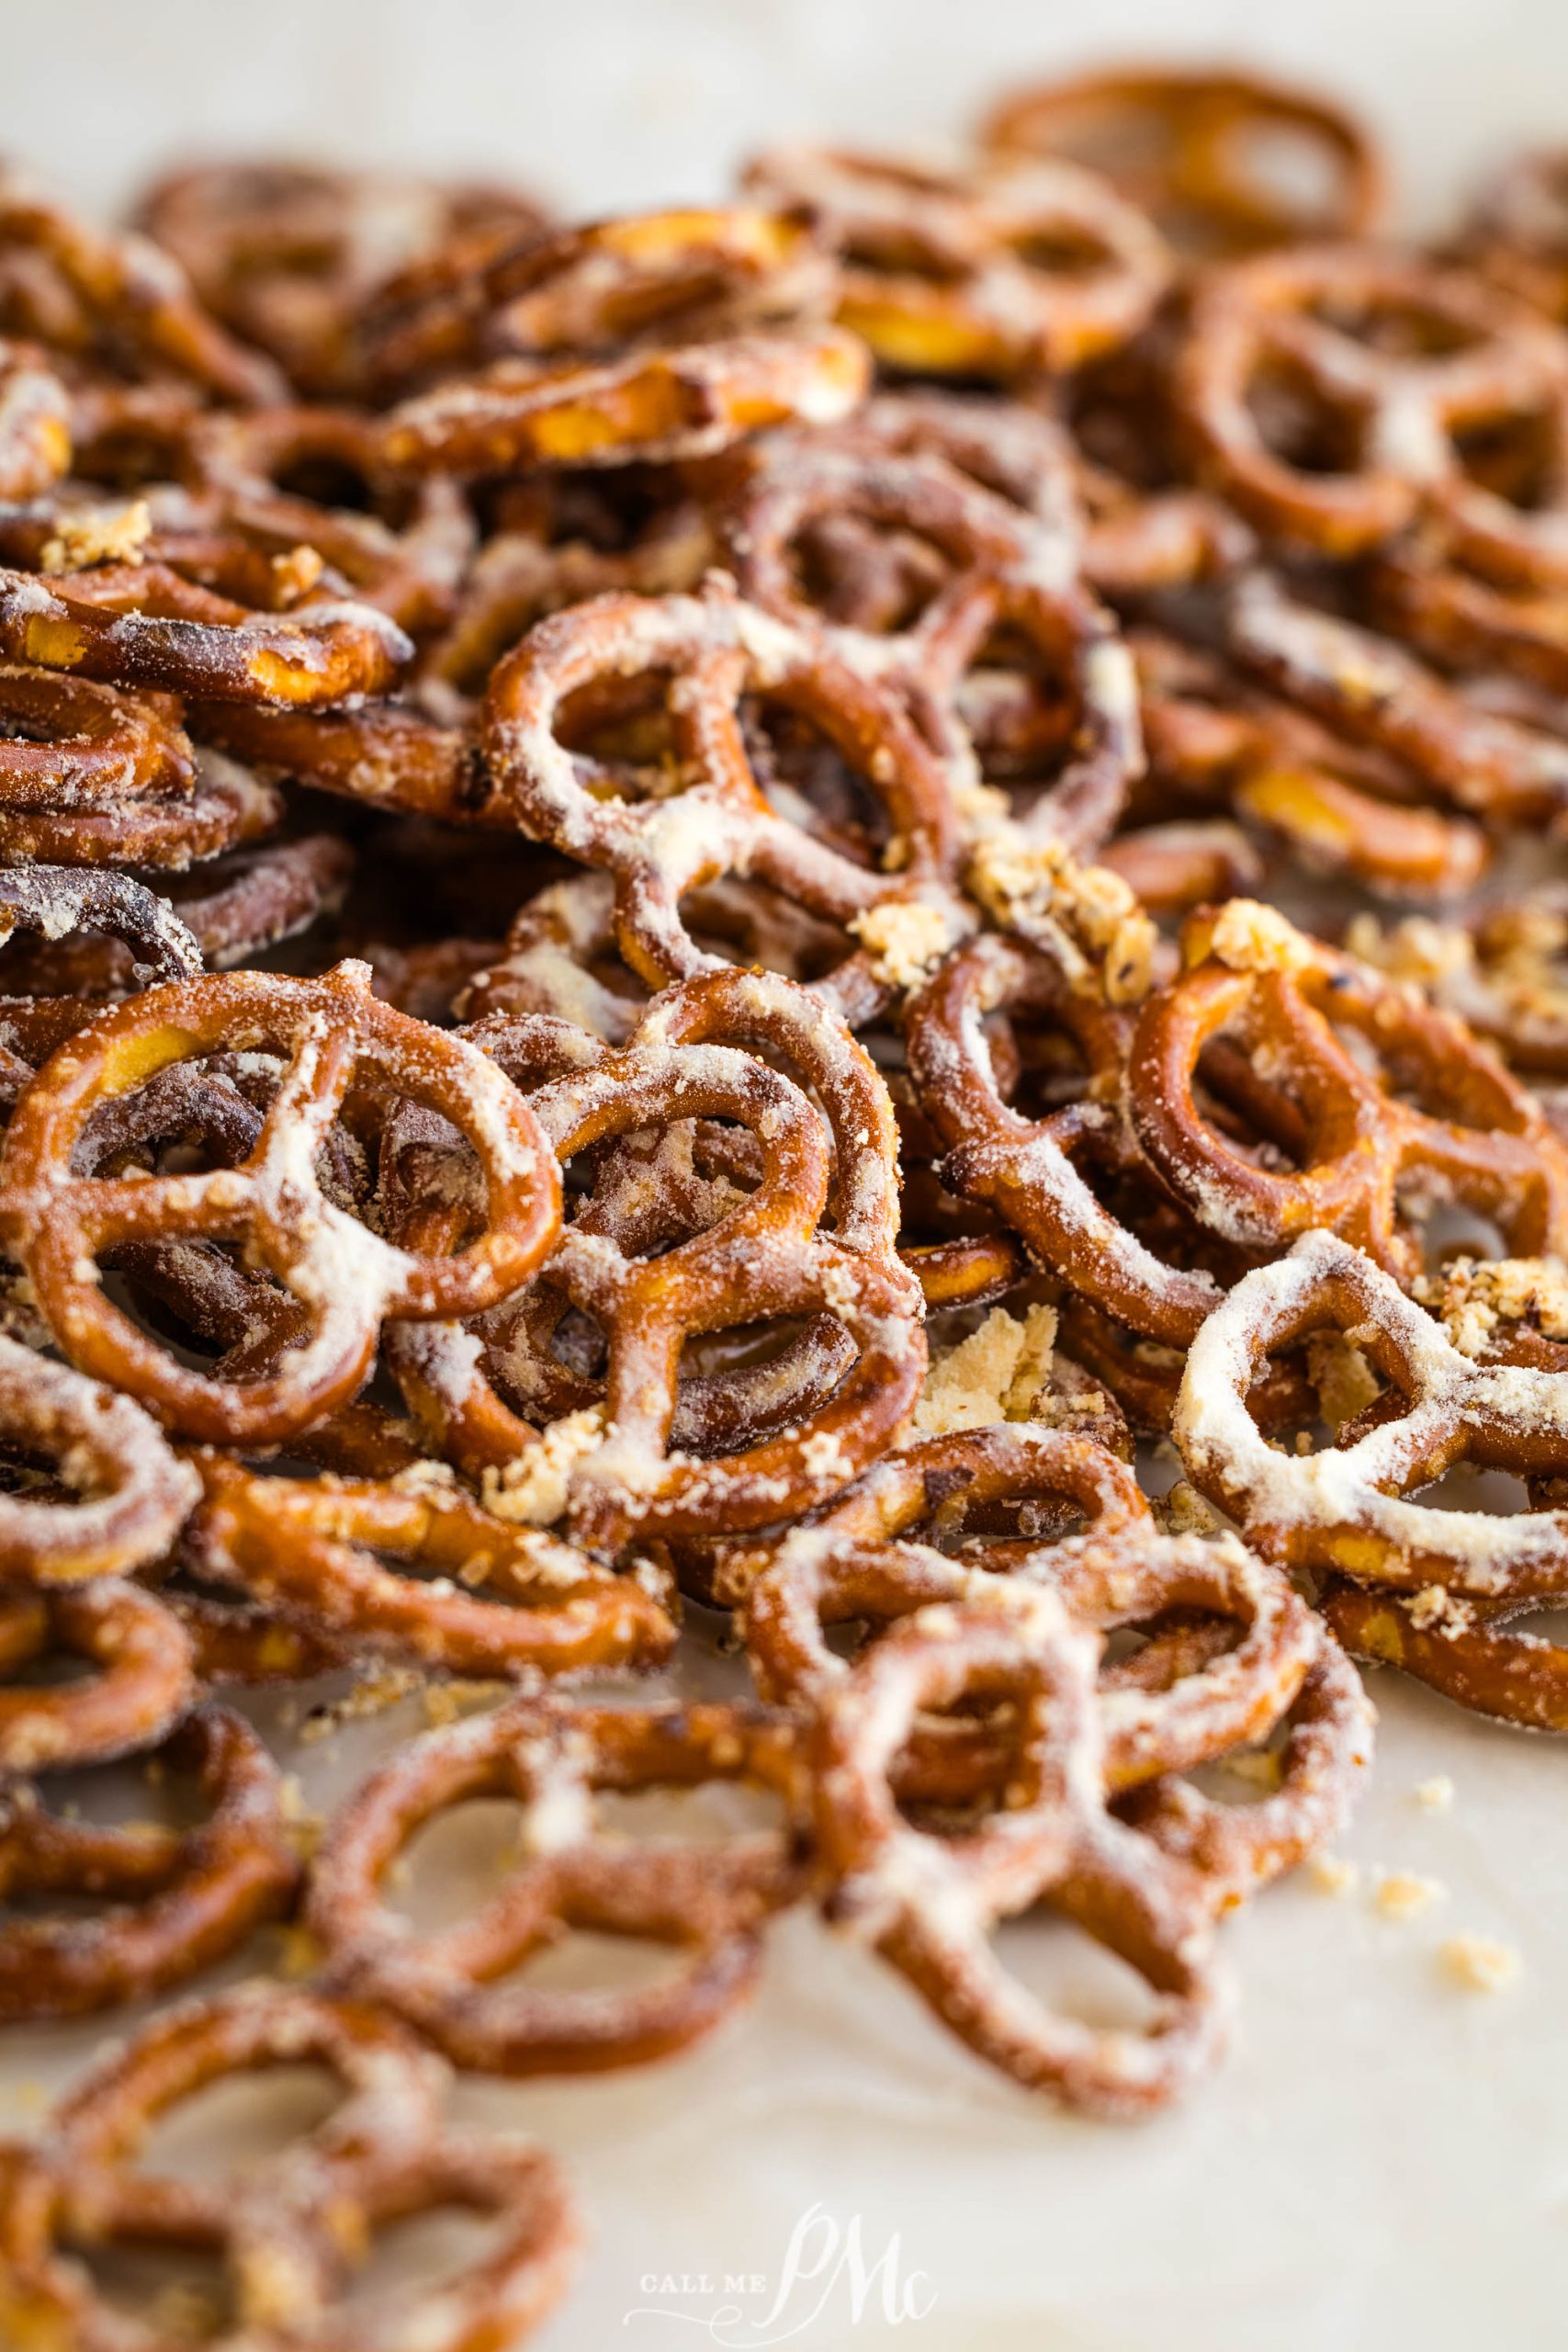 A pile of pretzels on a baking sheet.